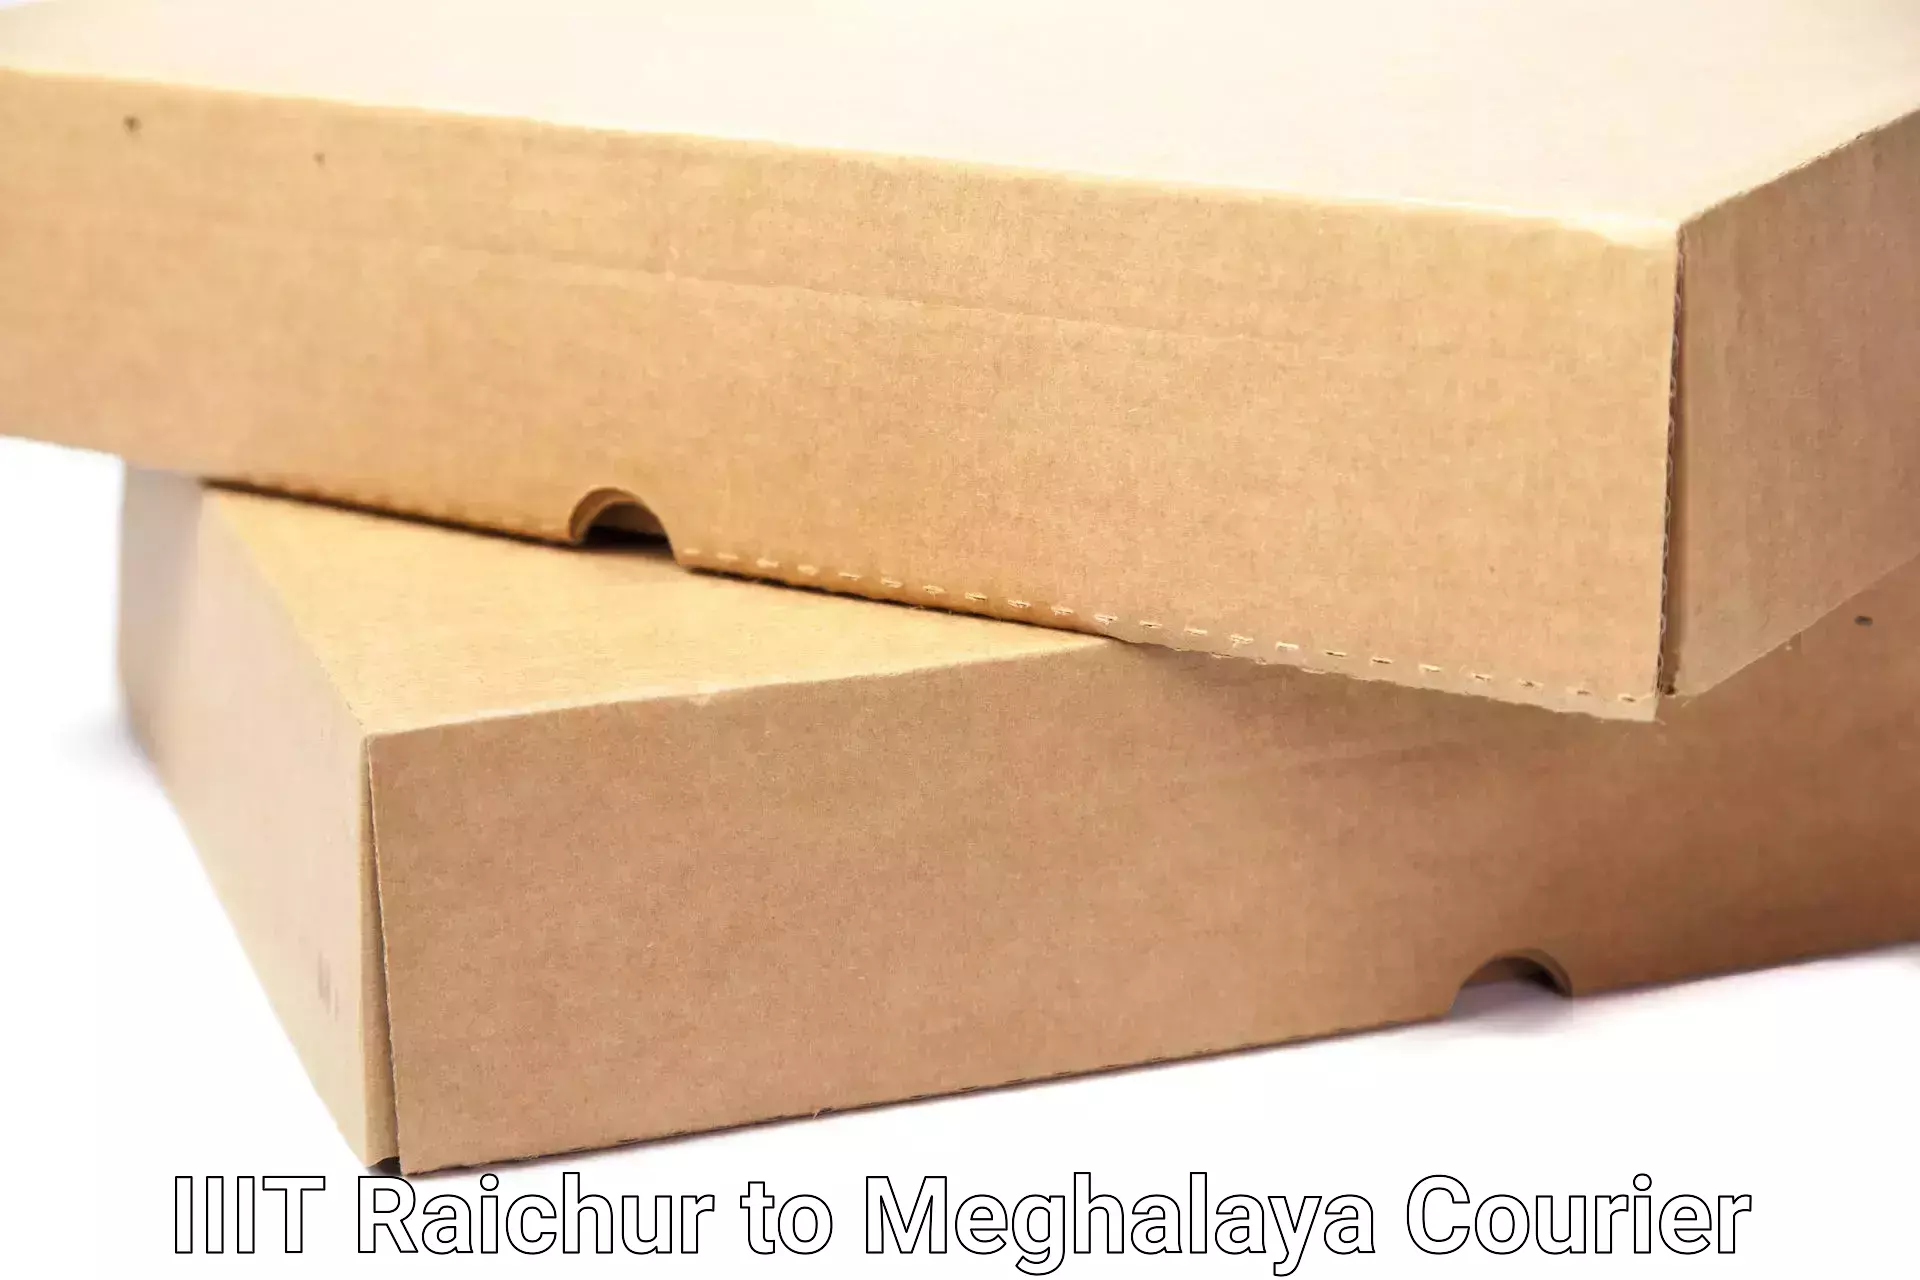 Household goods transport service IIIT Raichur to Meghalaya